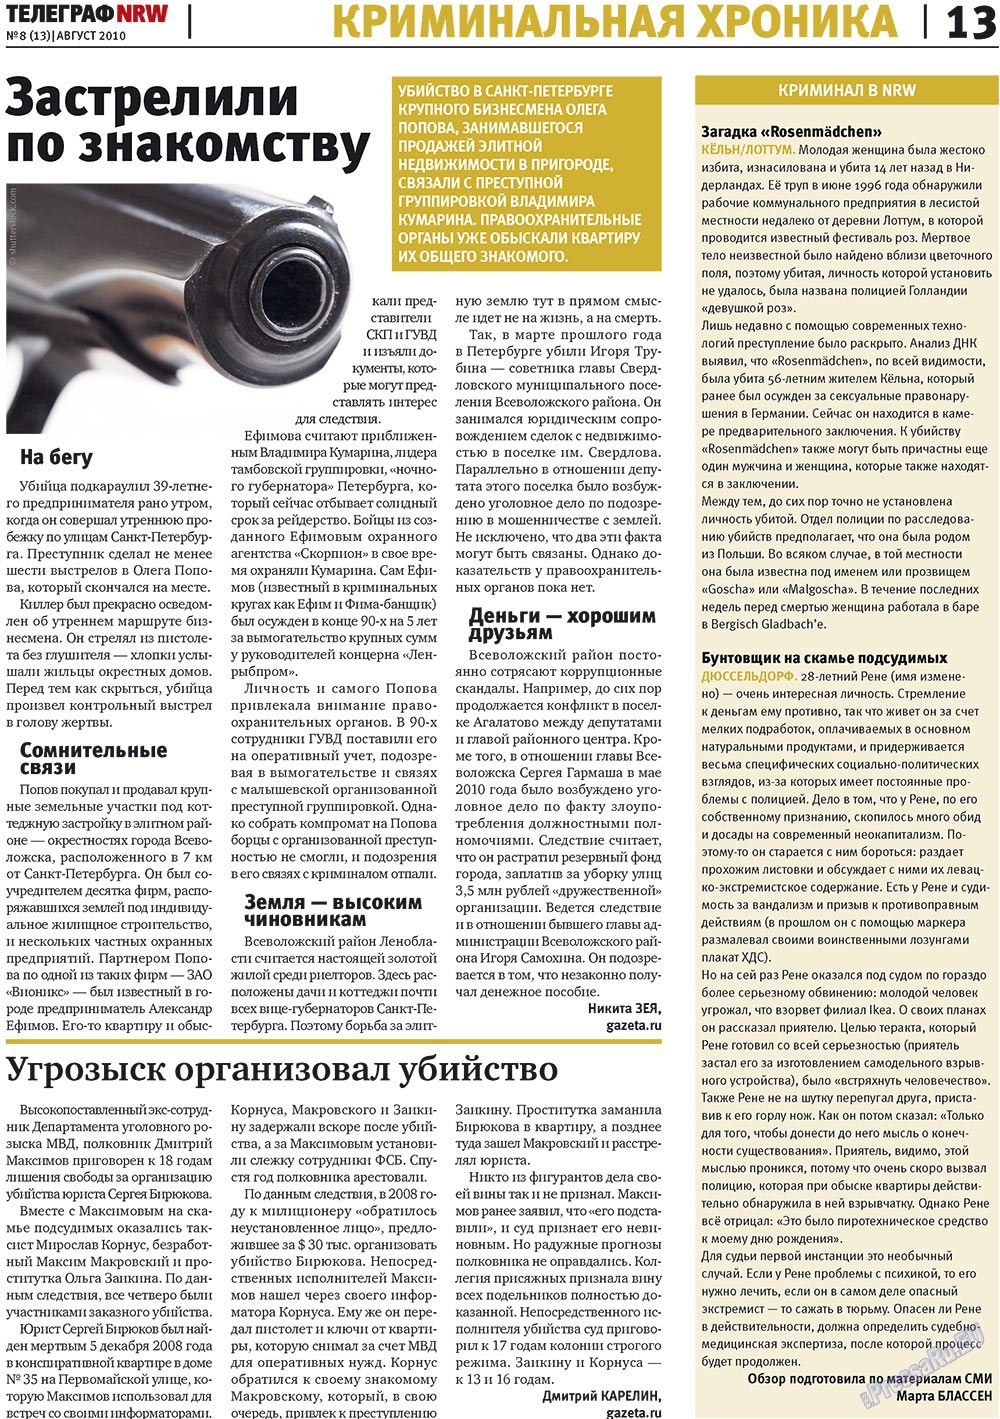 Телеграф NRW, газета. 2010 №8 стр.13